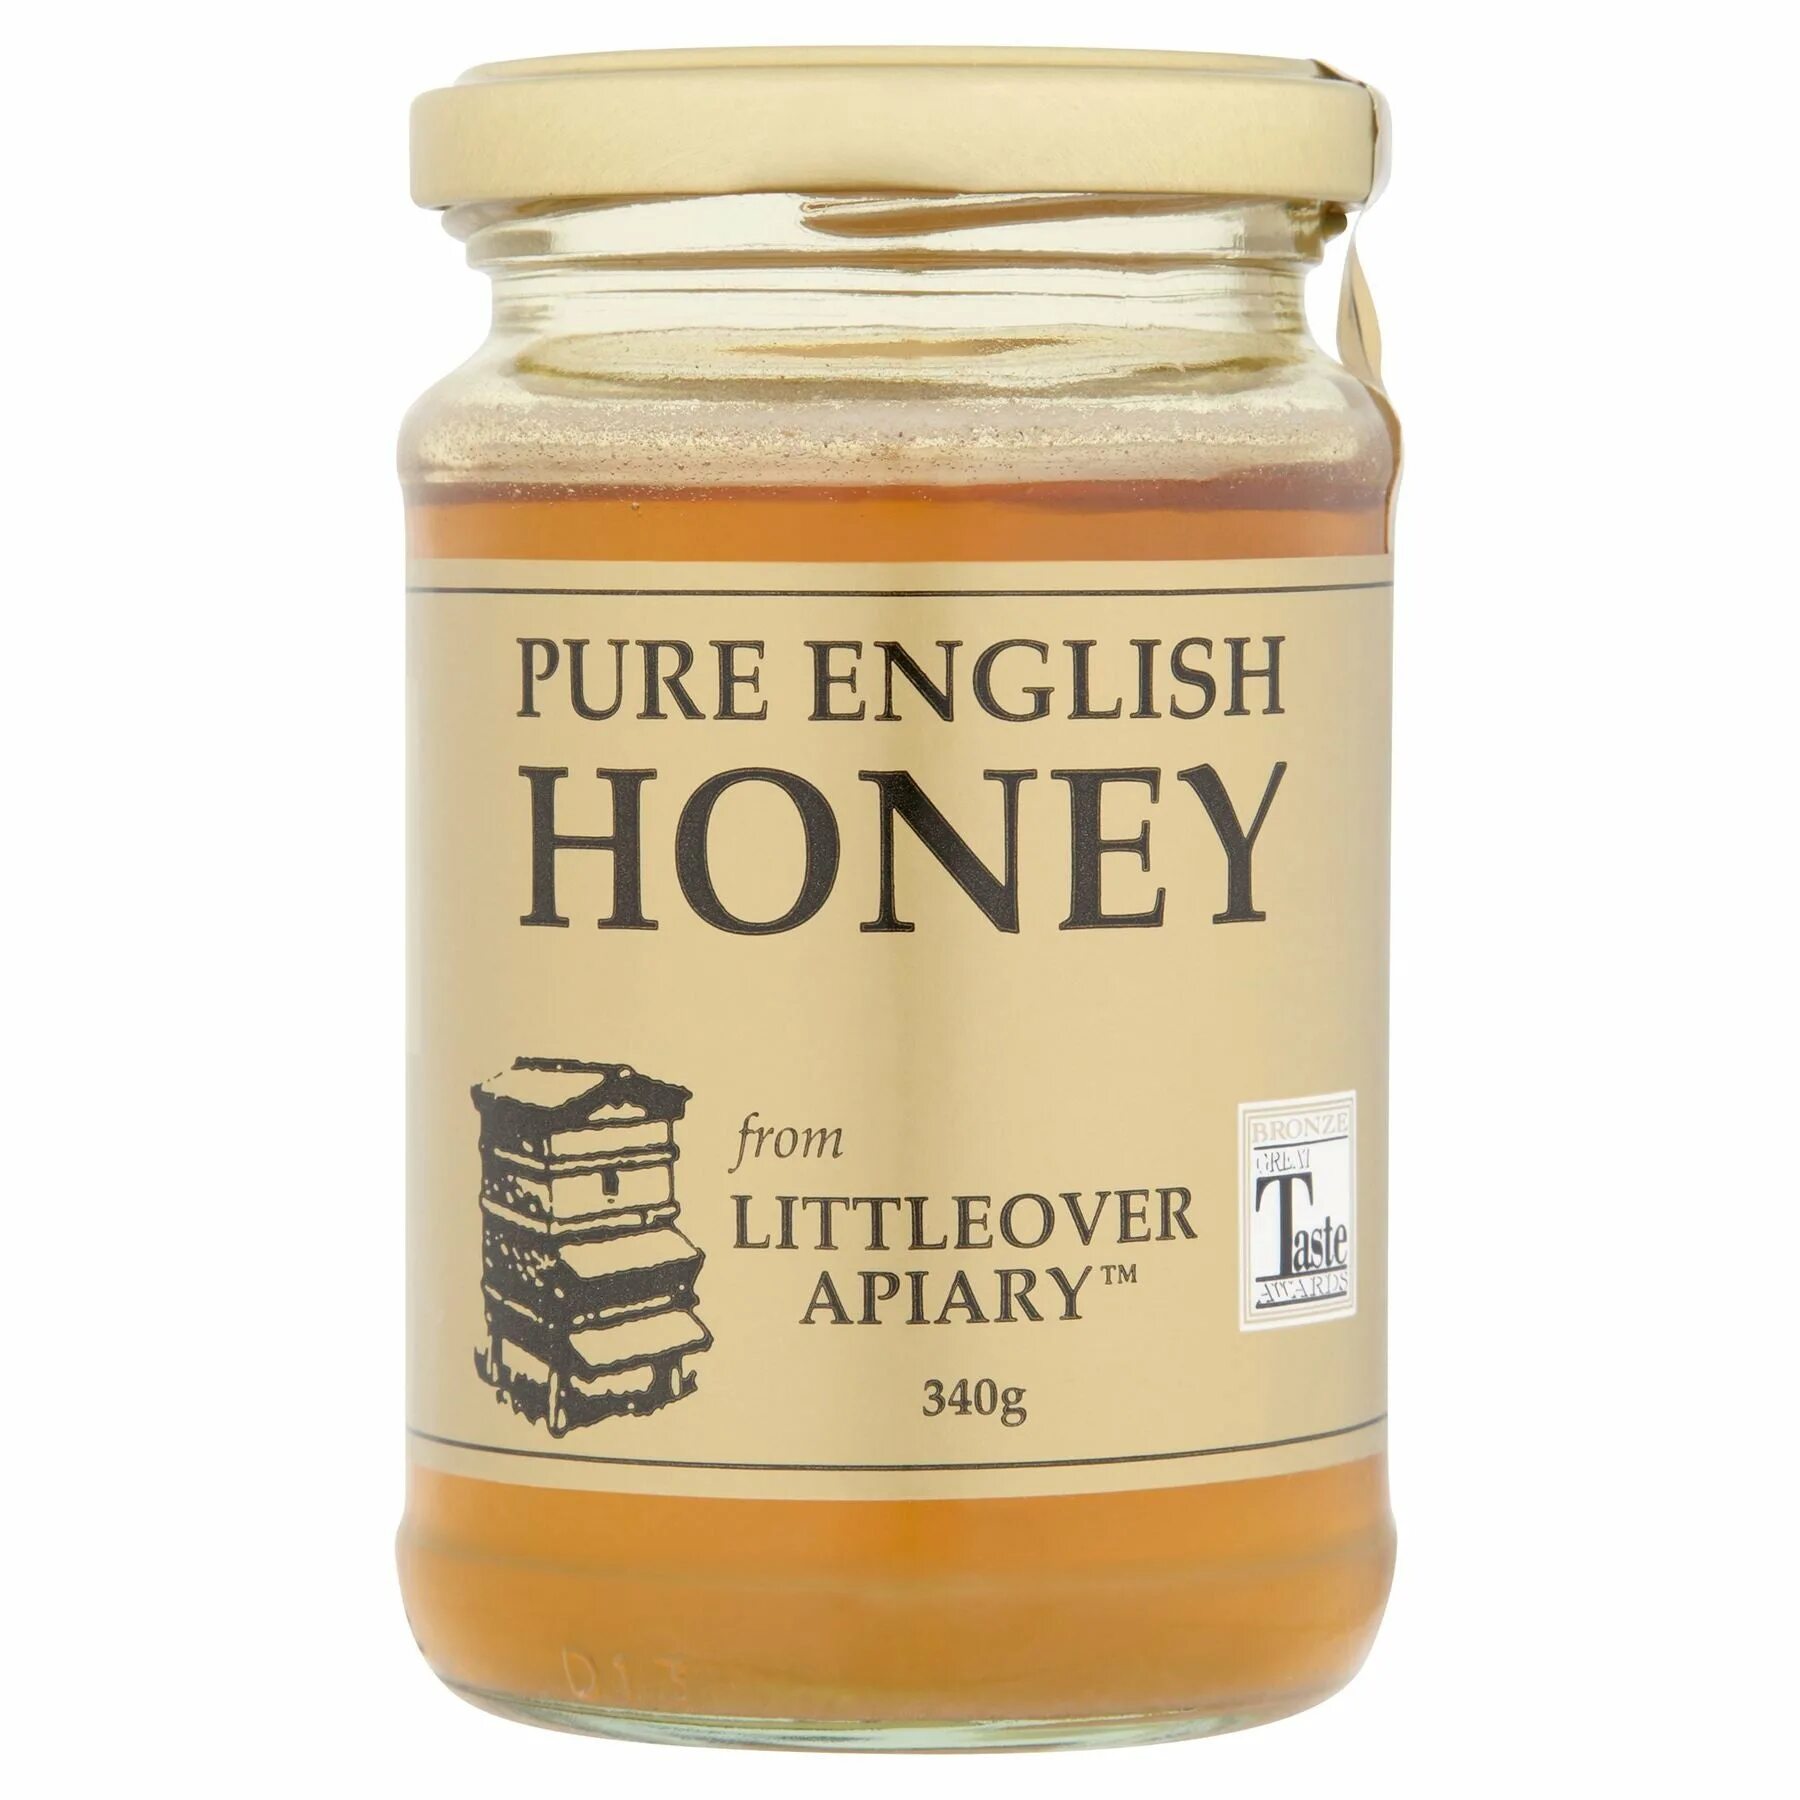 Мёд по английскому. Мед на английском языке. Пюре на английском. Littleover apiaries Honey. Honey is перевод